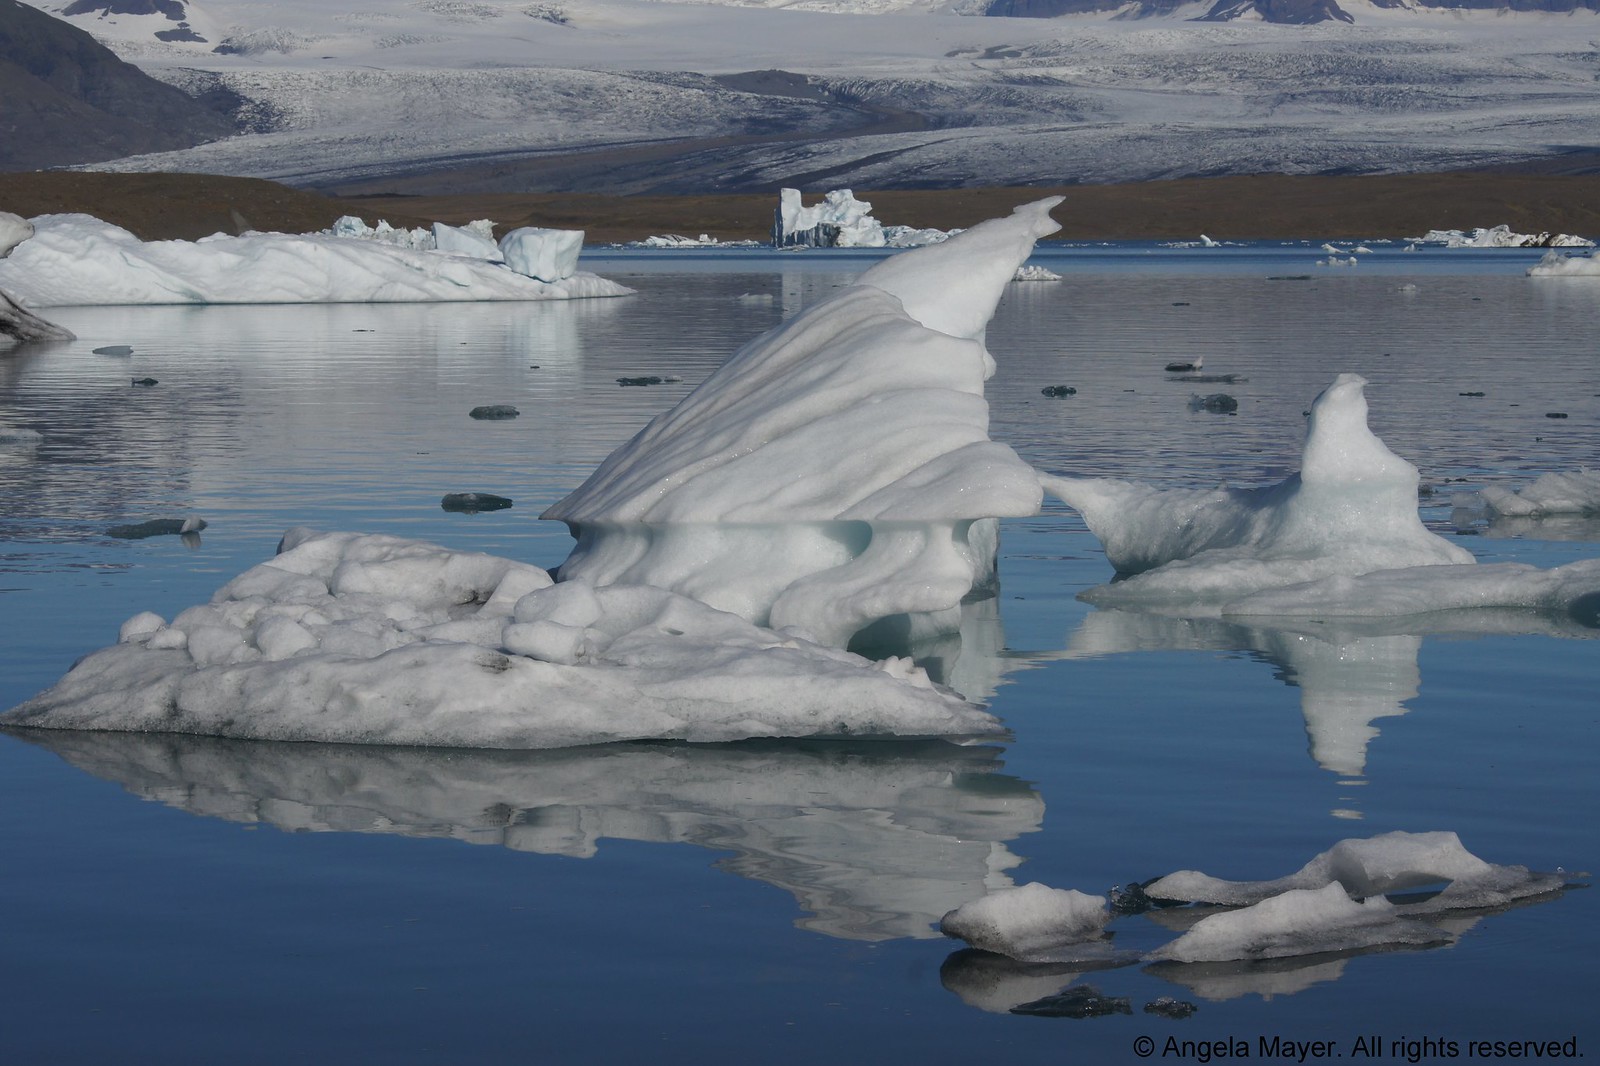 Floating Icebergs